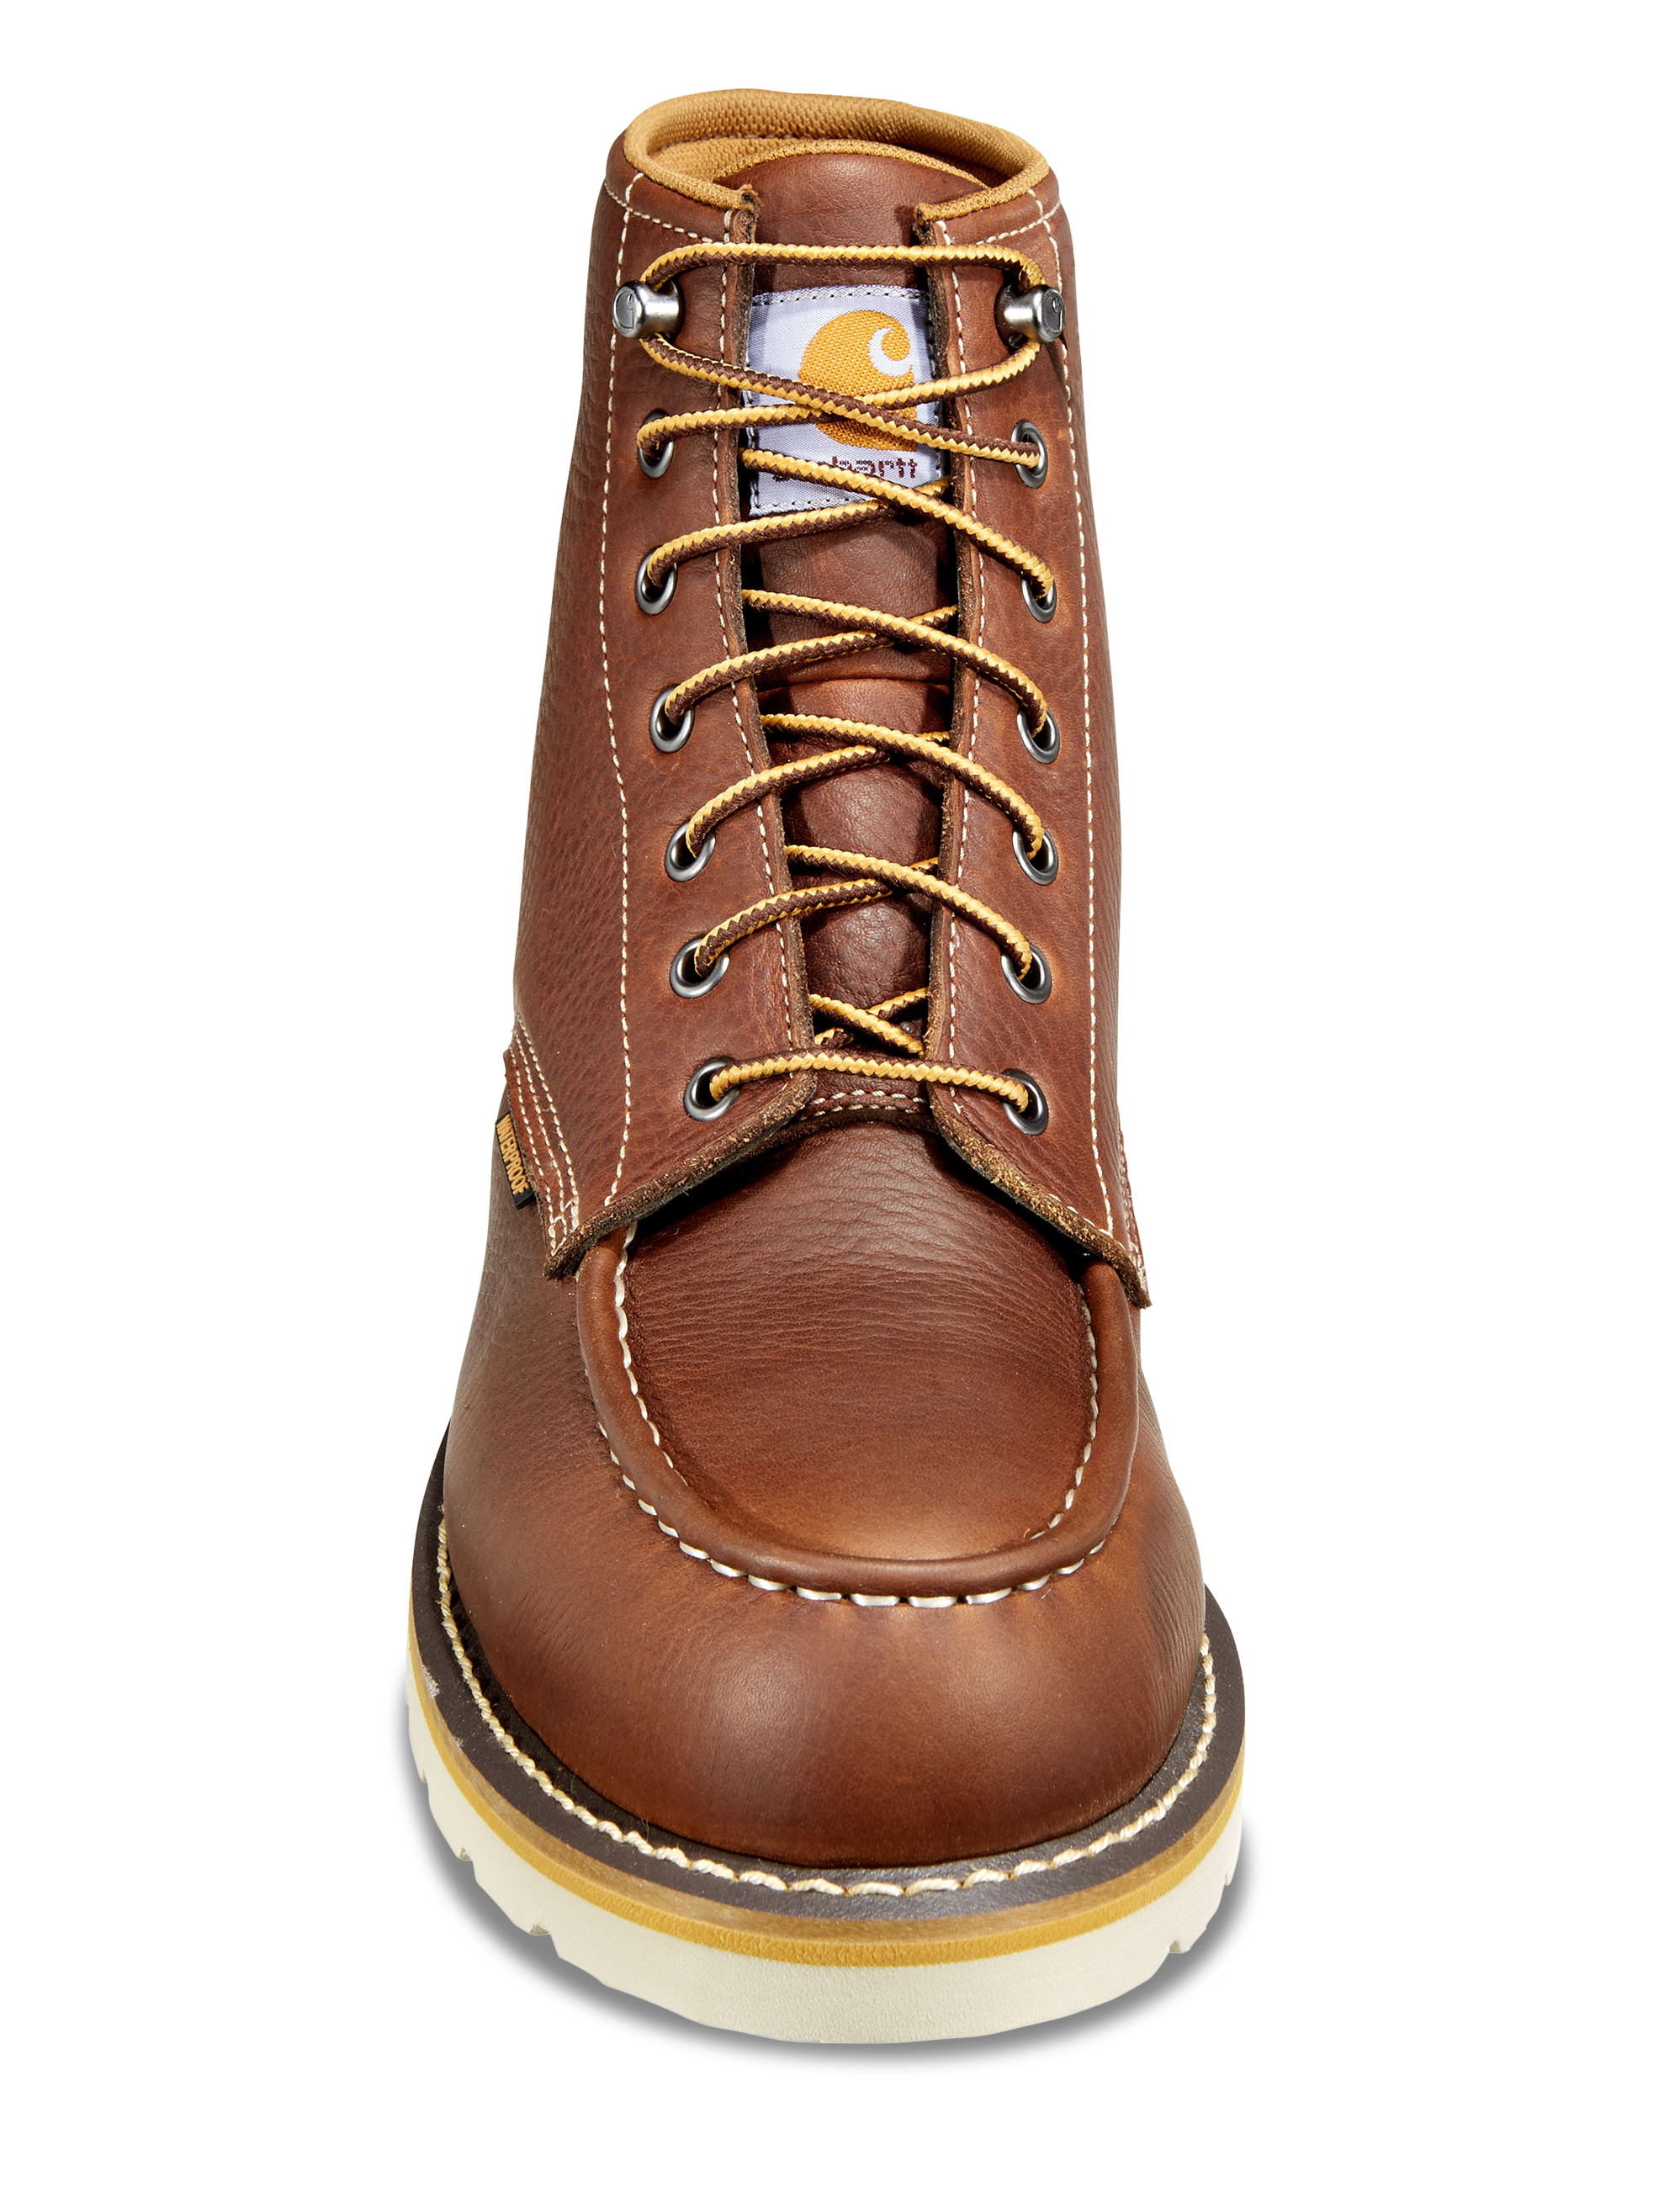 Carhartt 6" Moc Toe Wedge Boots